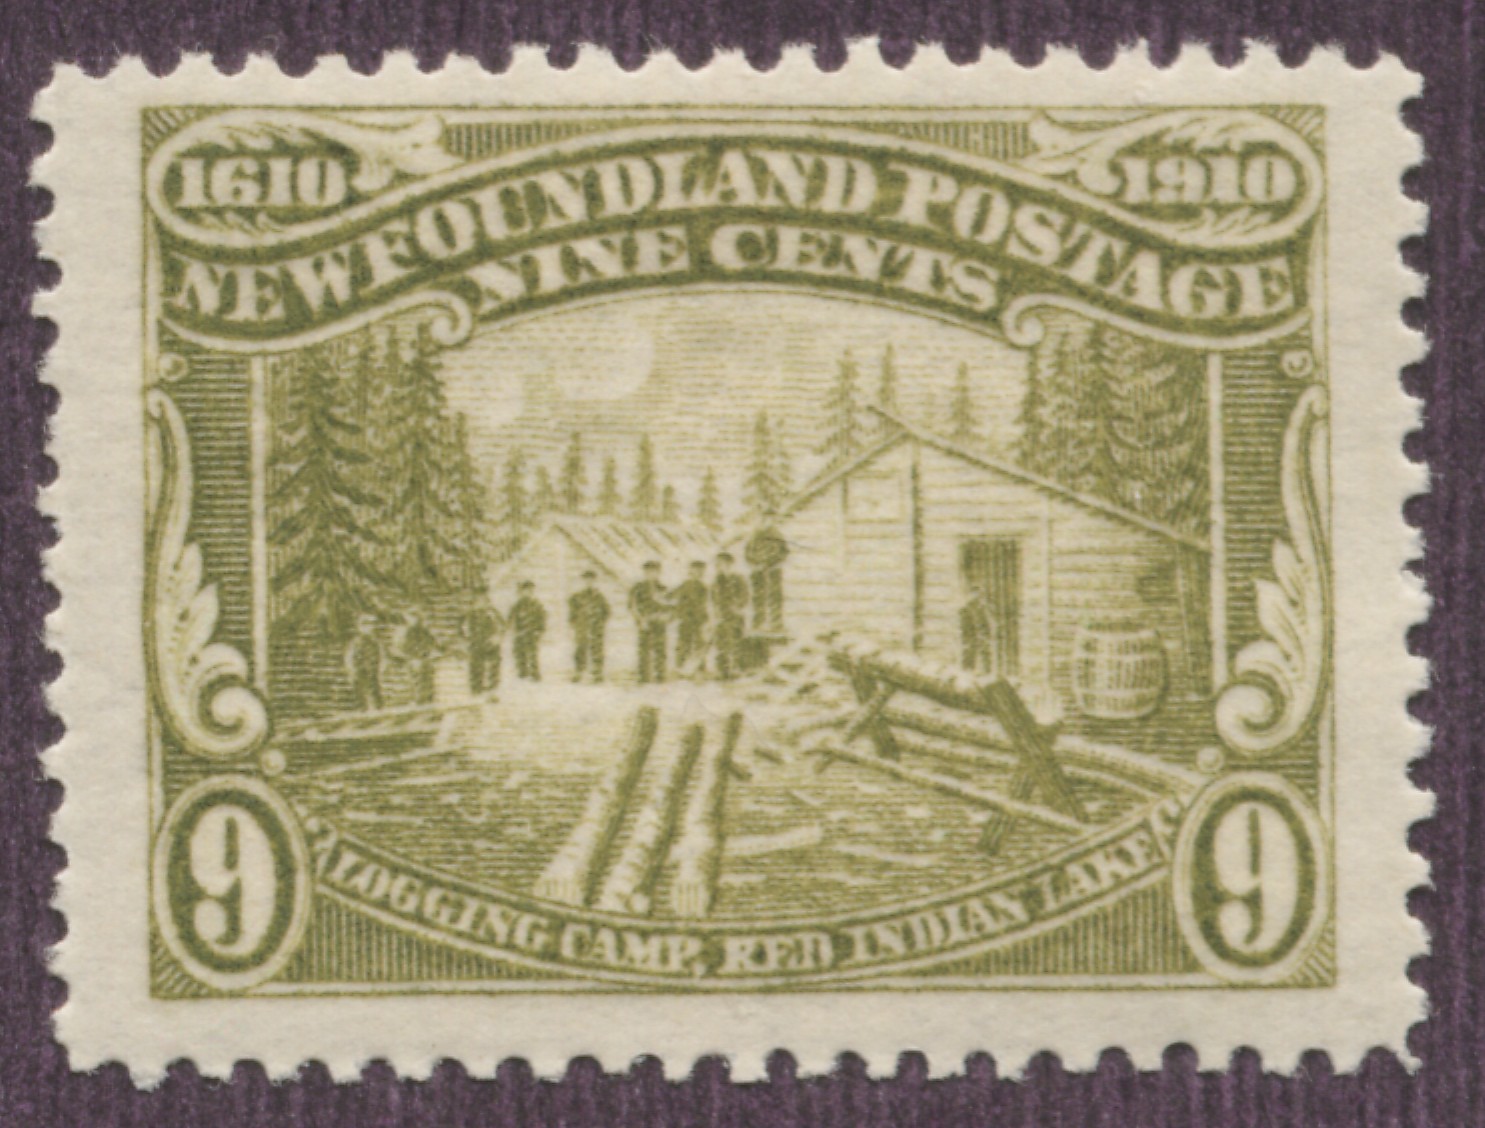 stunningmesh postage stamps 10